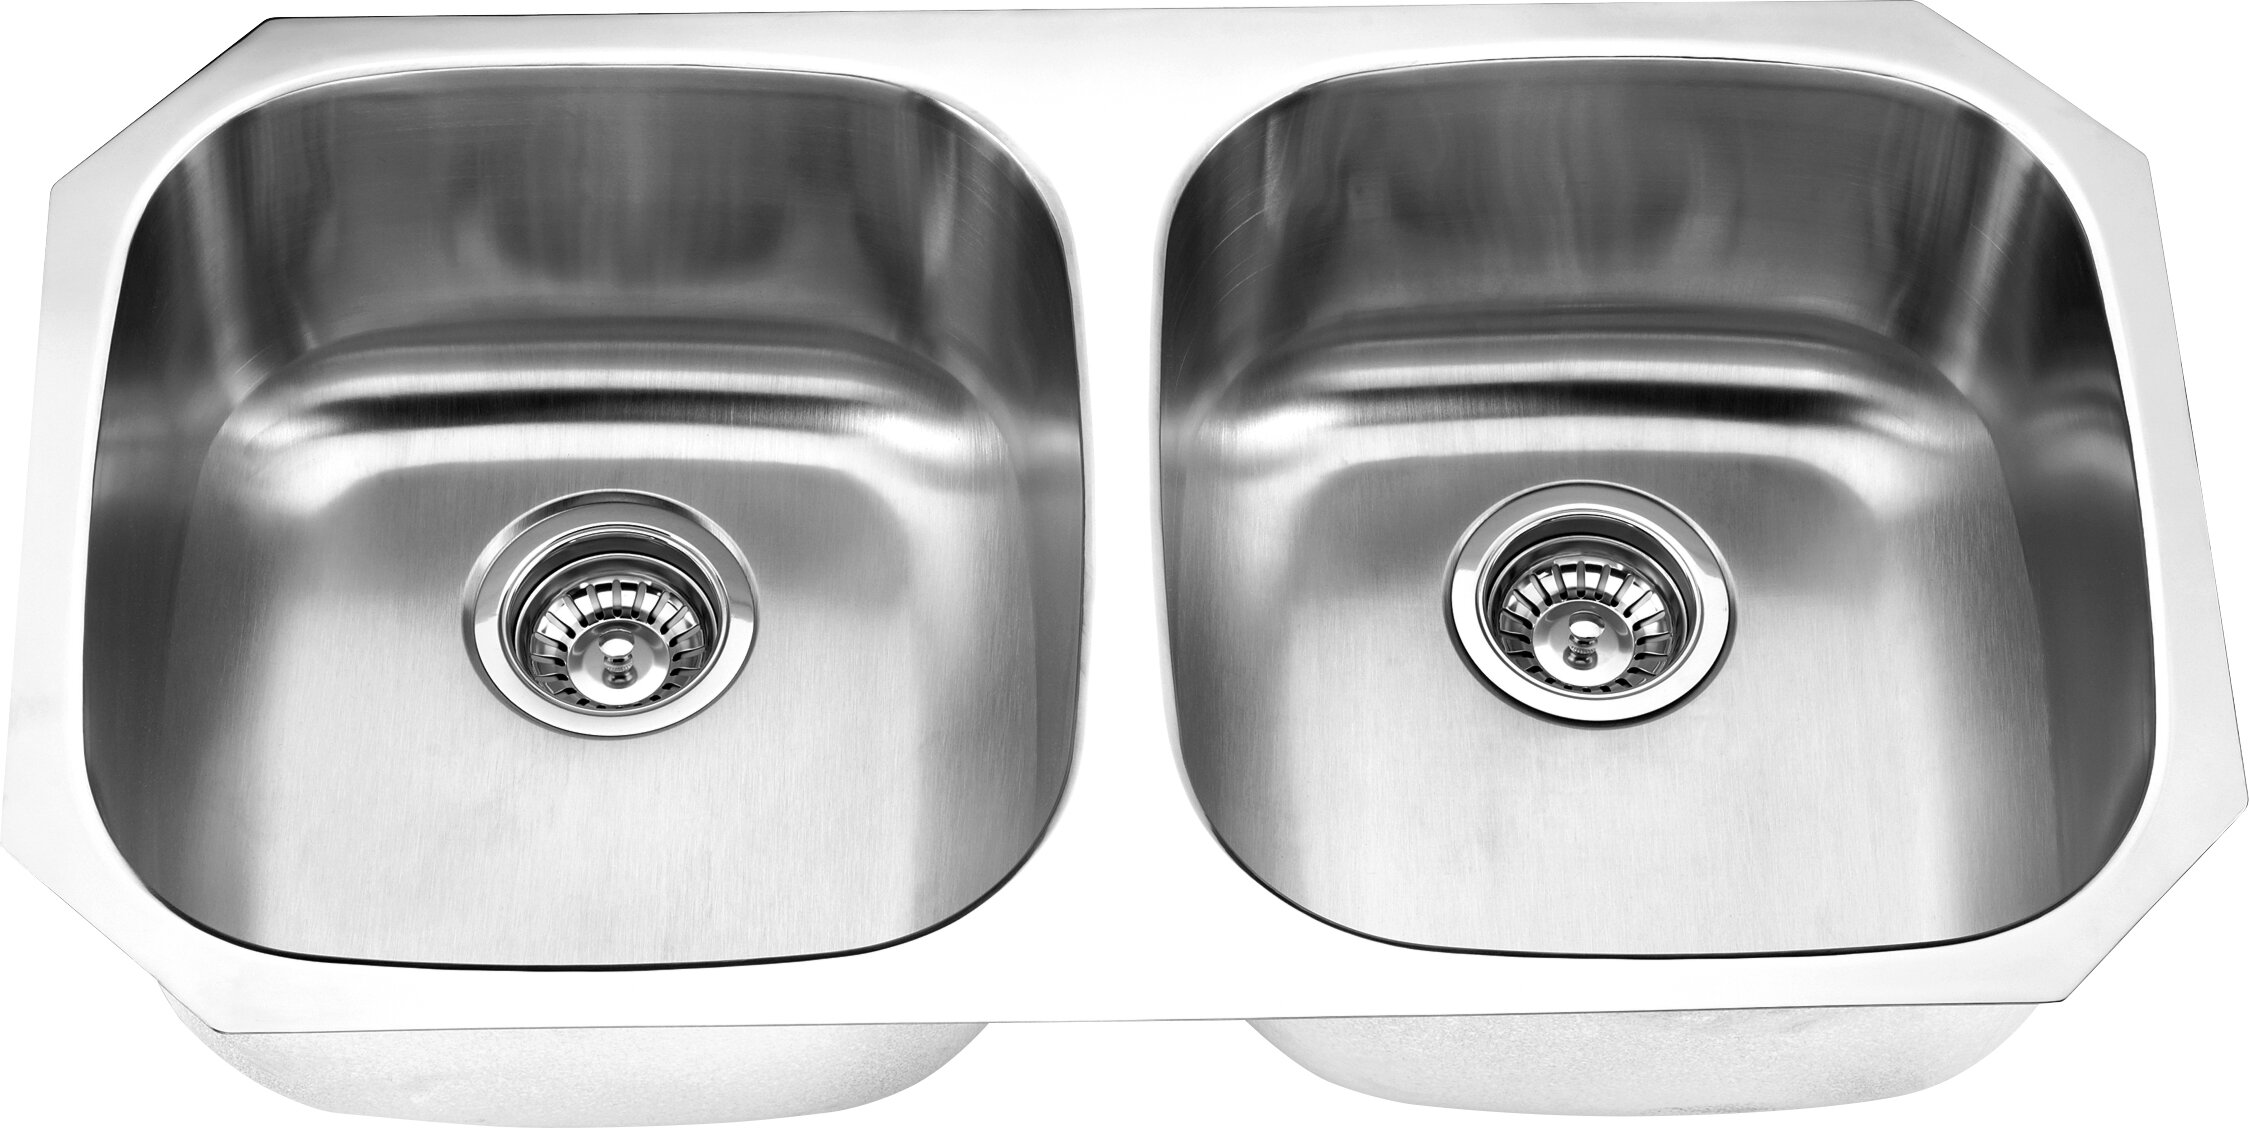 Yosemite Home Decor MAG502 18-Gauge Stainless Steel Undermount Double Bowl Kitchen Sink